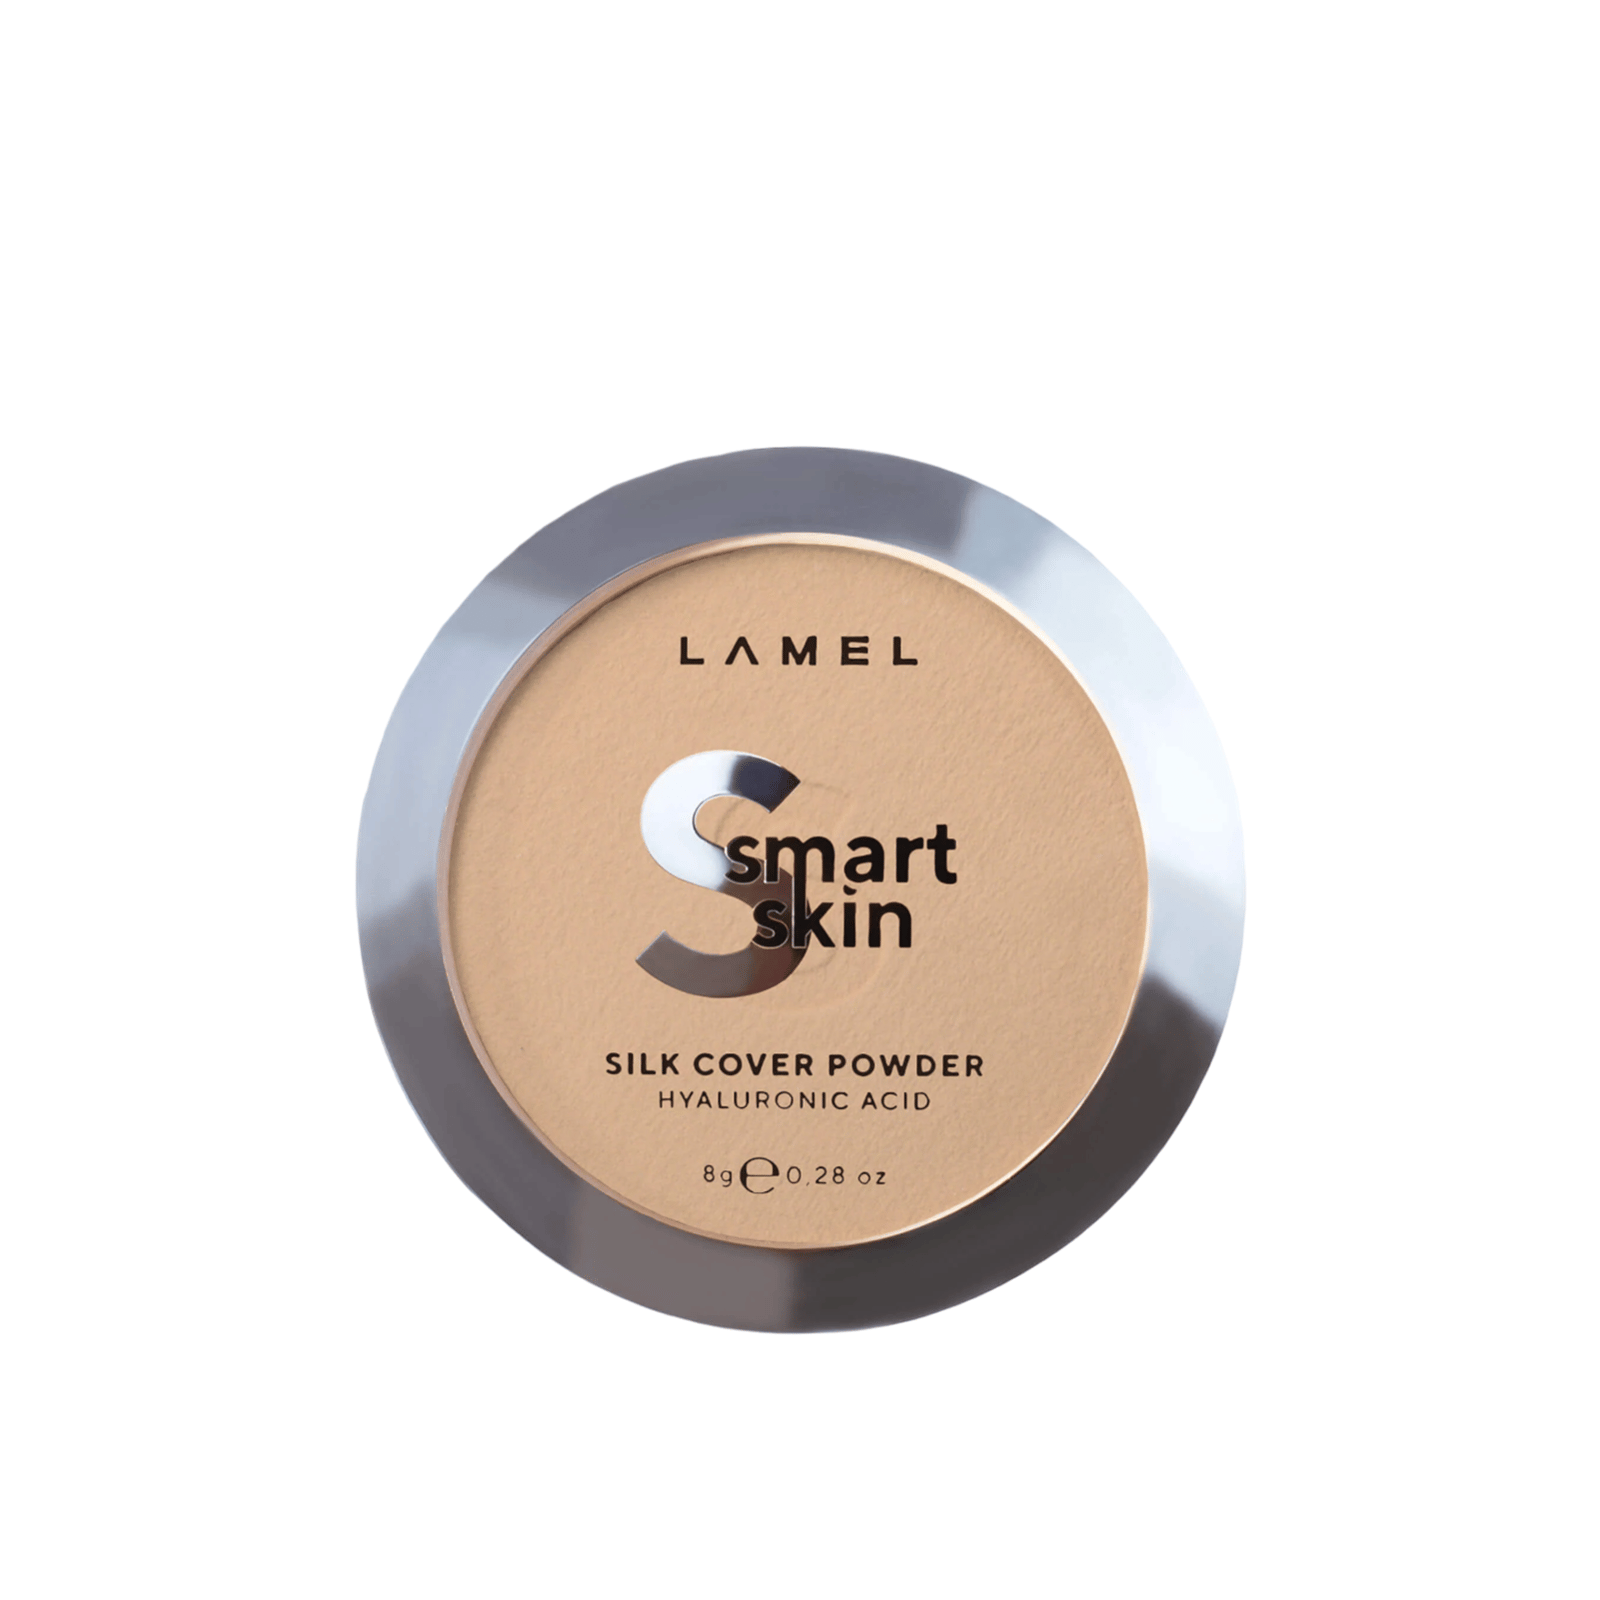 Lamel Smart Skin Silk Cover Powder 404 Tan Beige 8g (0.28oz)